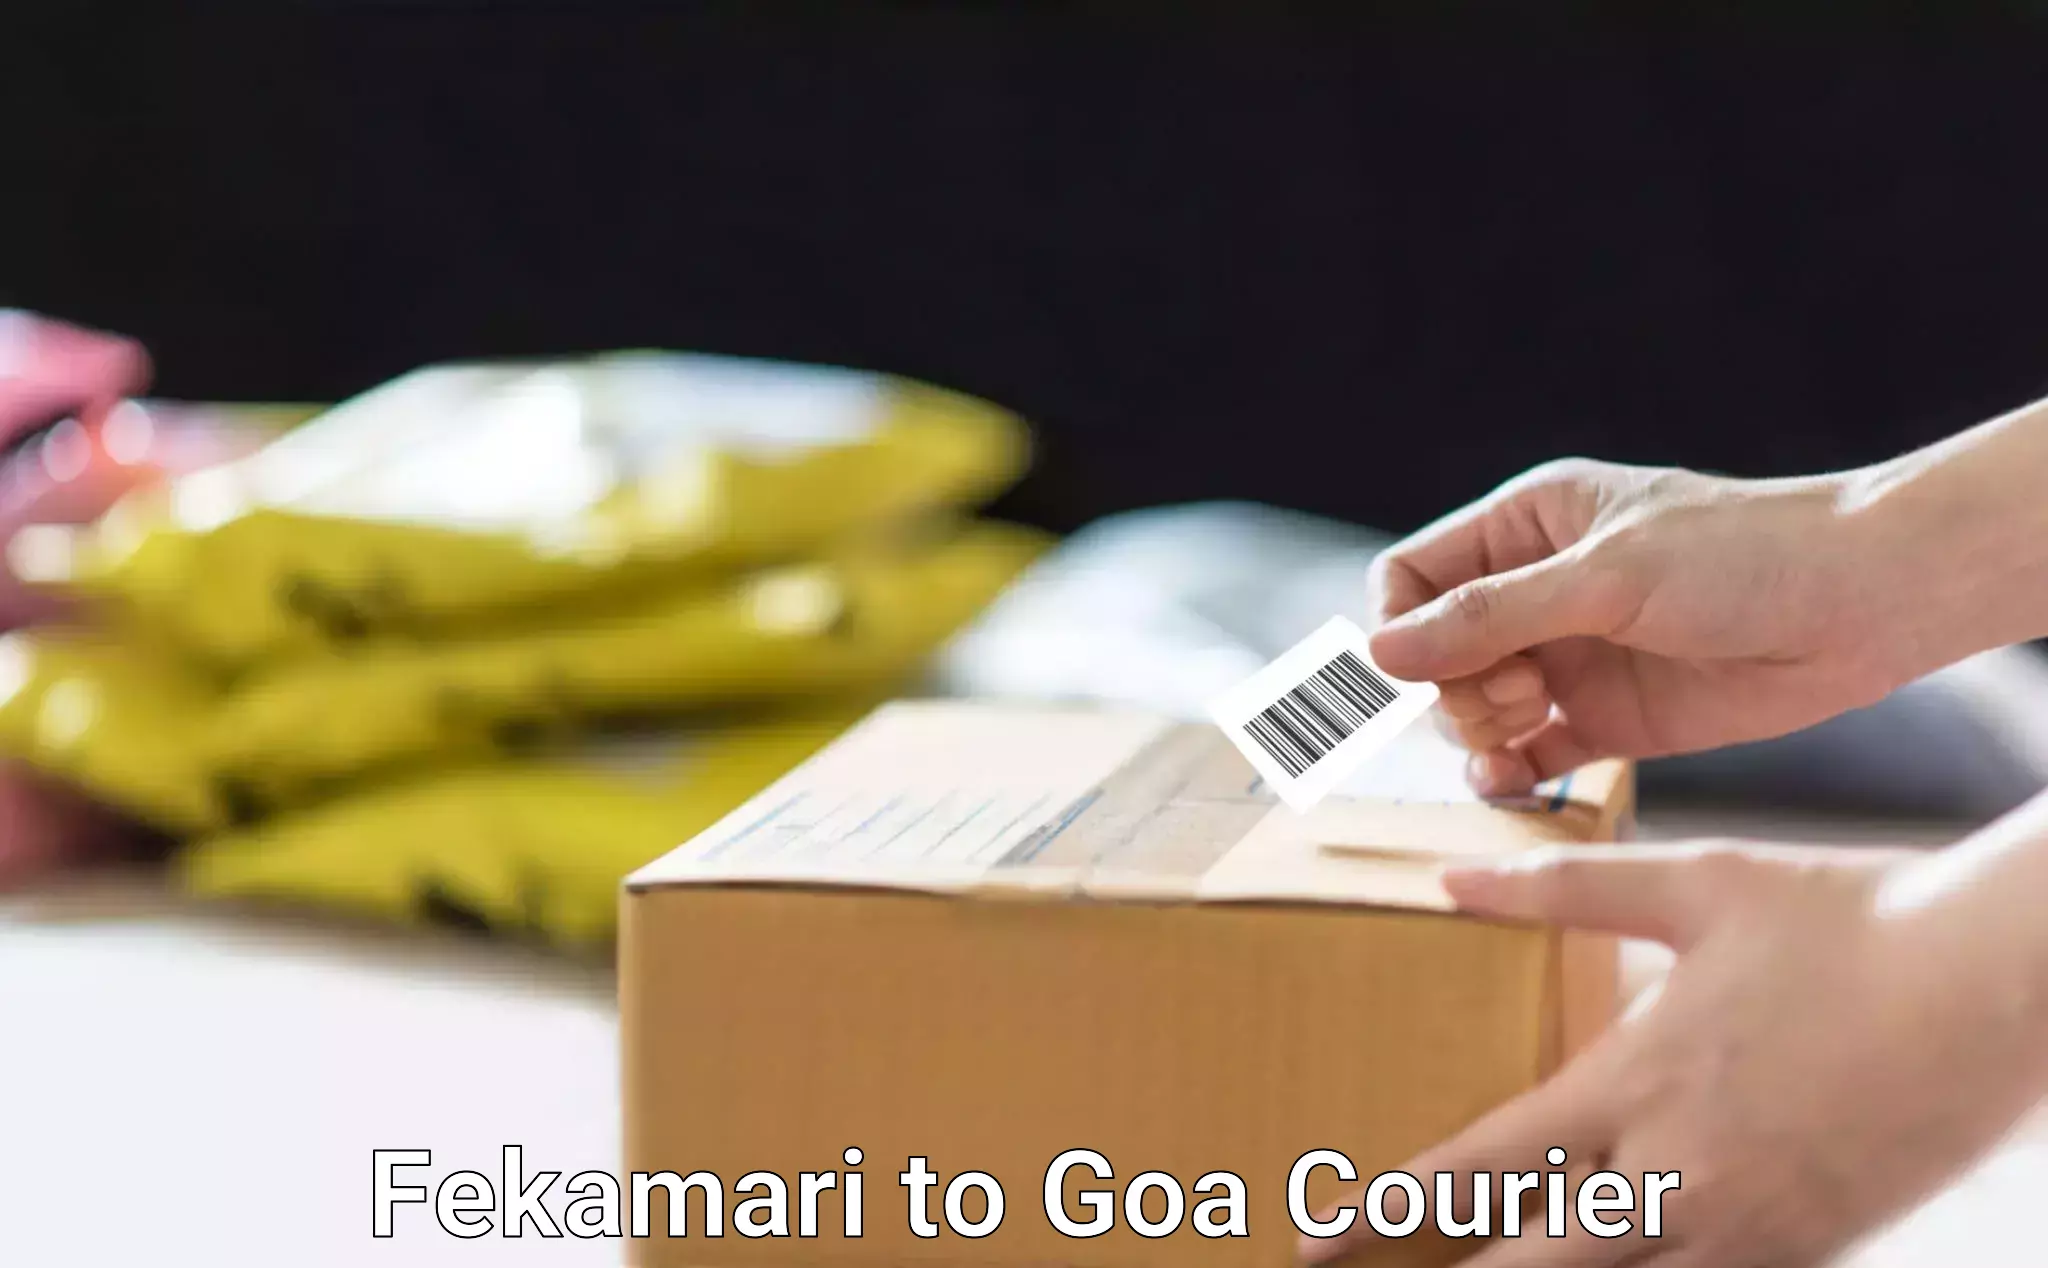 Quick dispatch service Fekamari to South Goa